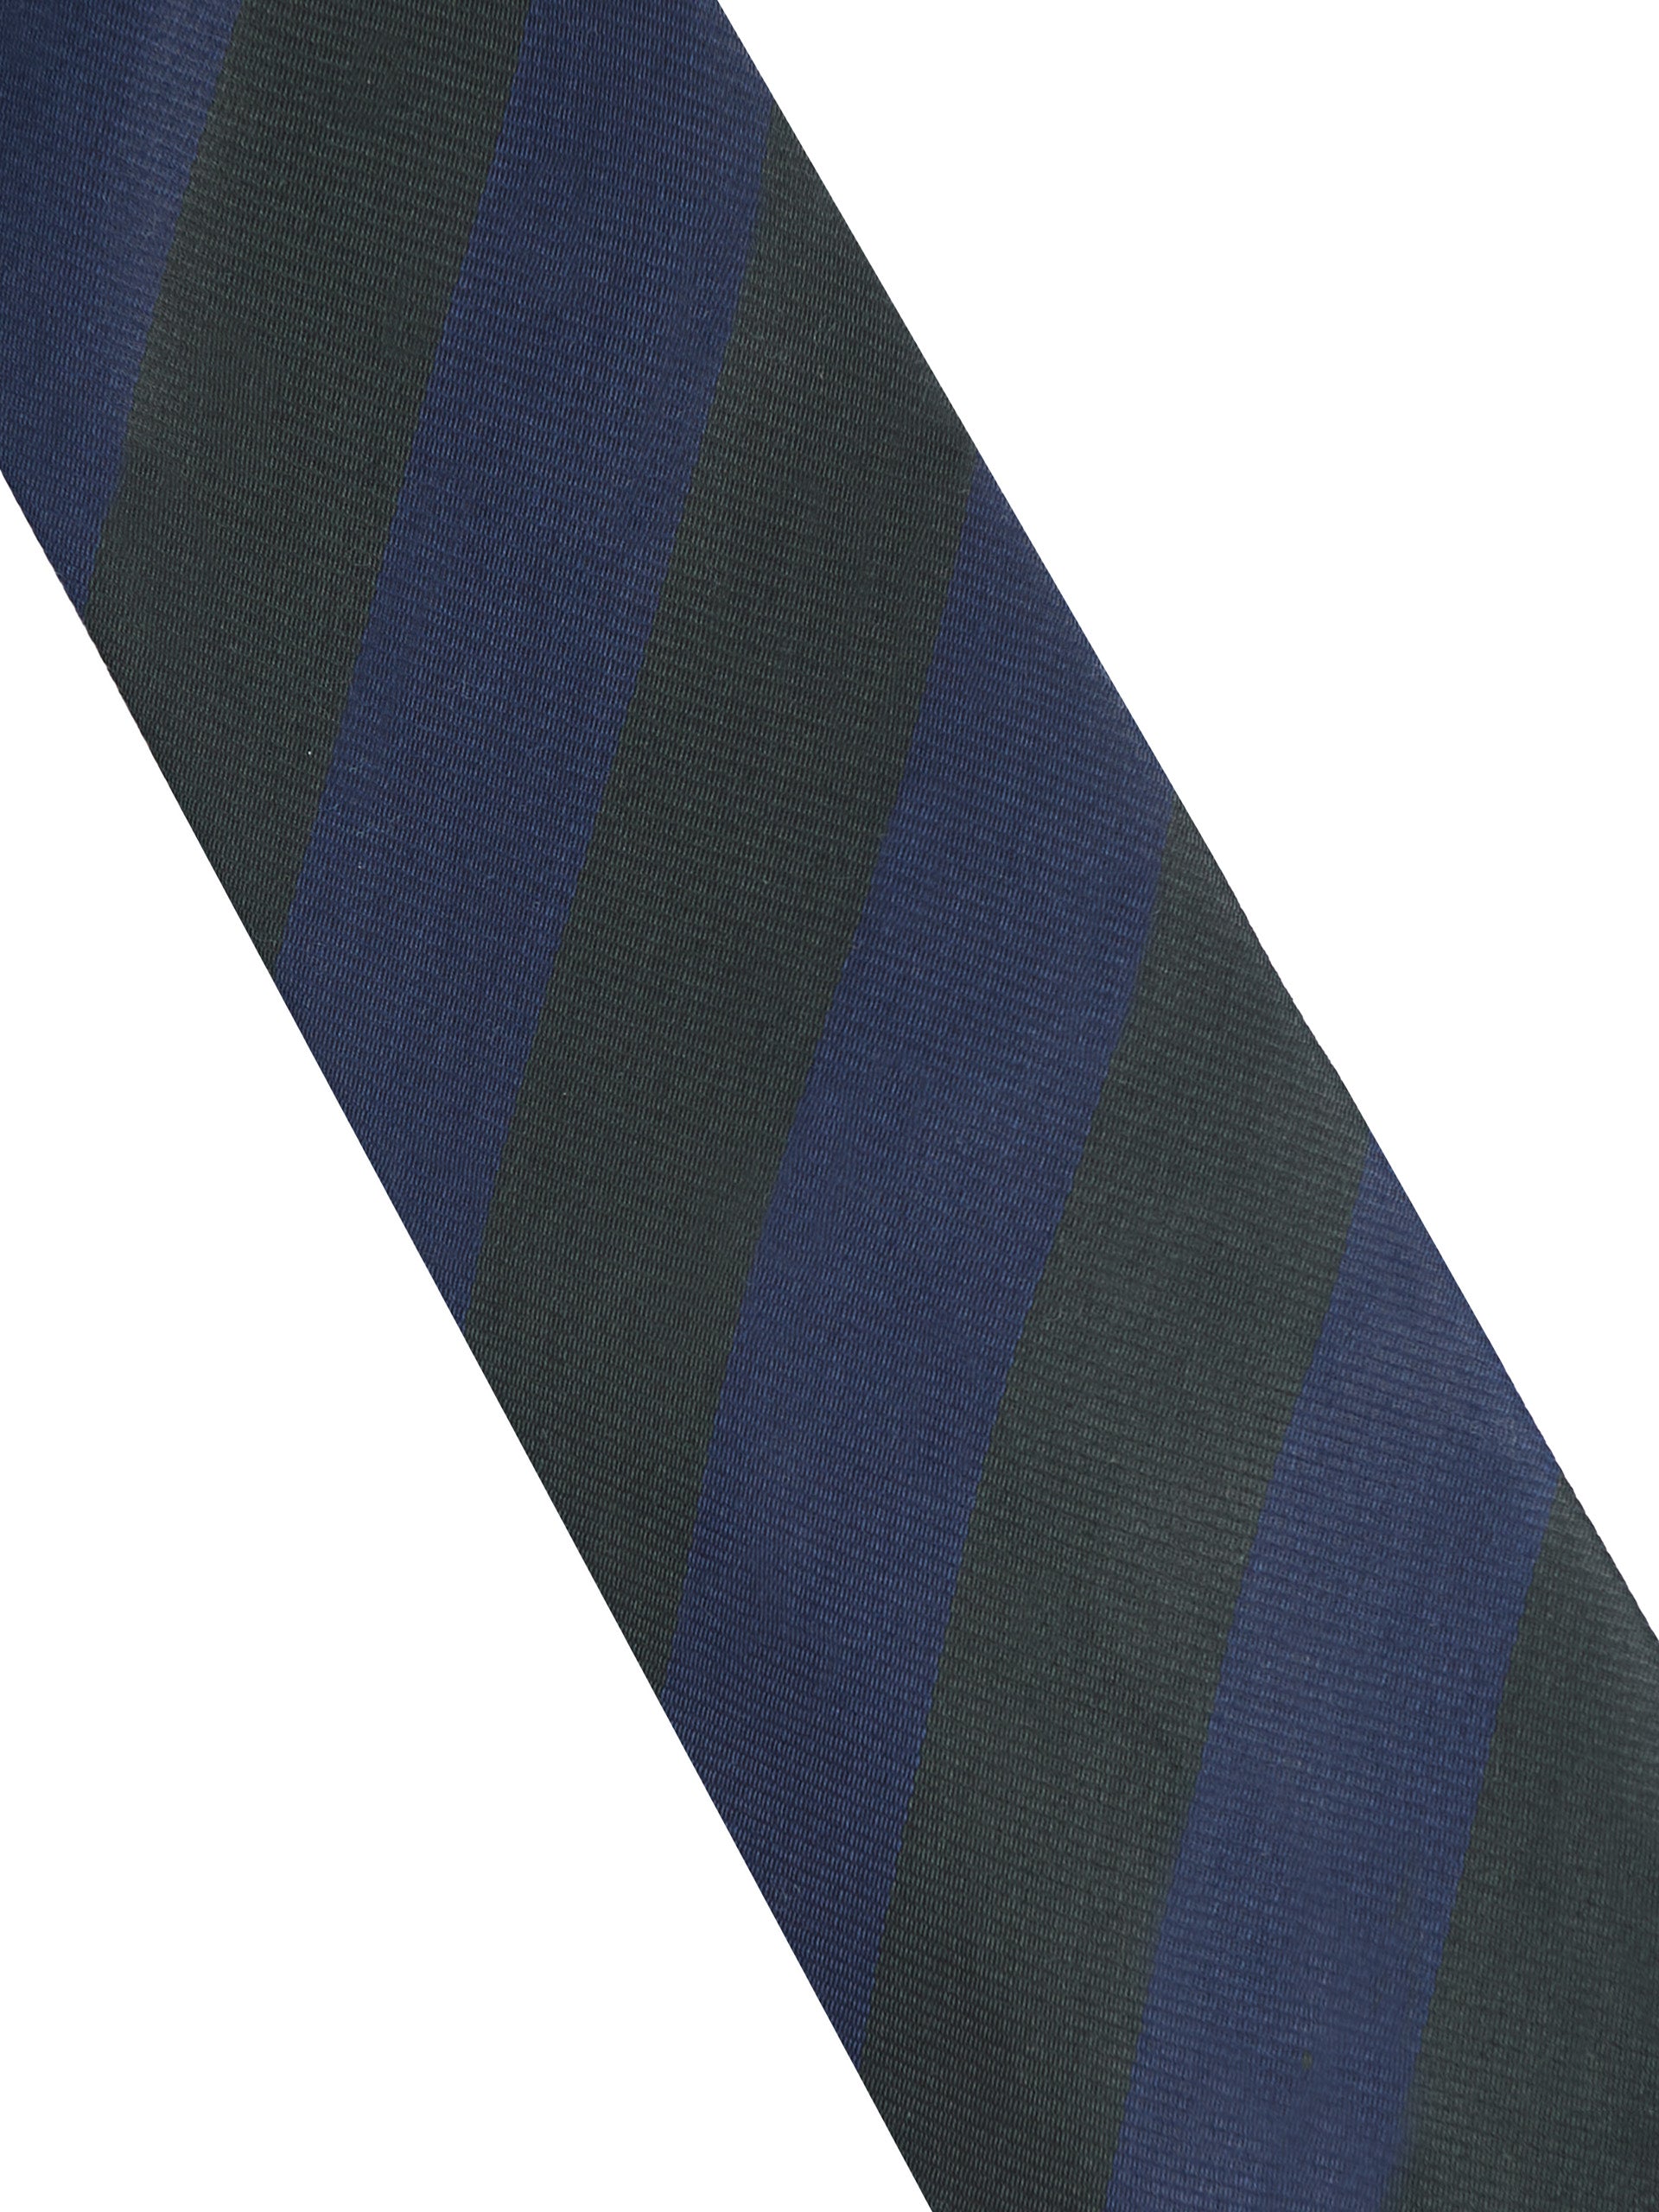 Corbata raya diagonal verde